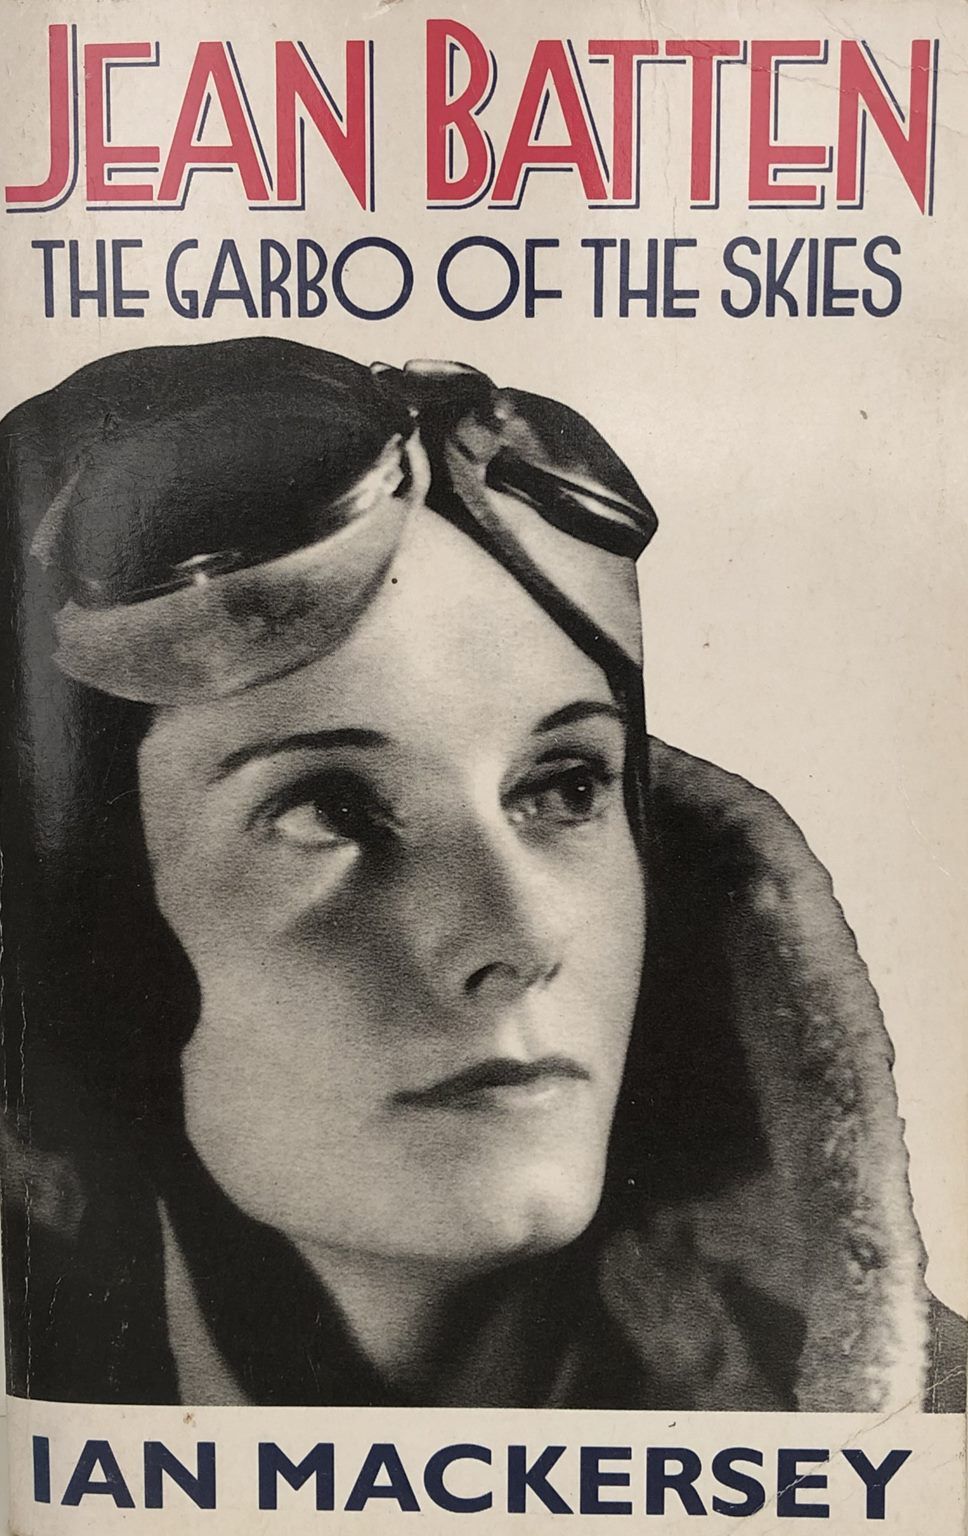 JEAN BATTEN: The Garbo of the Skies